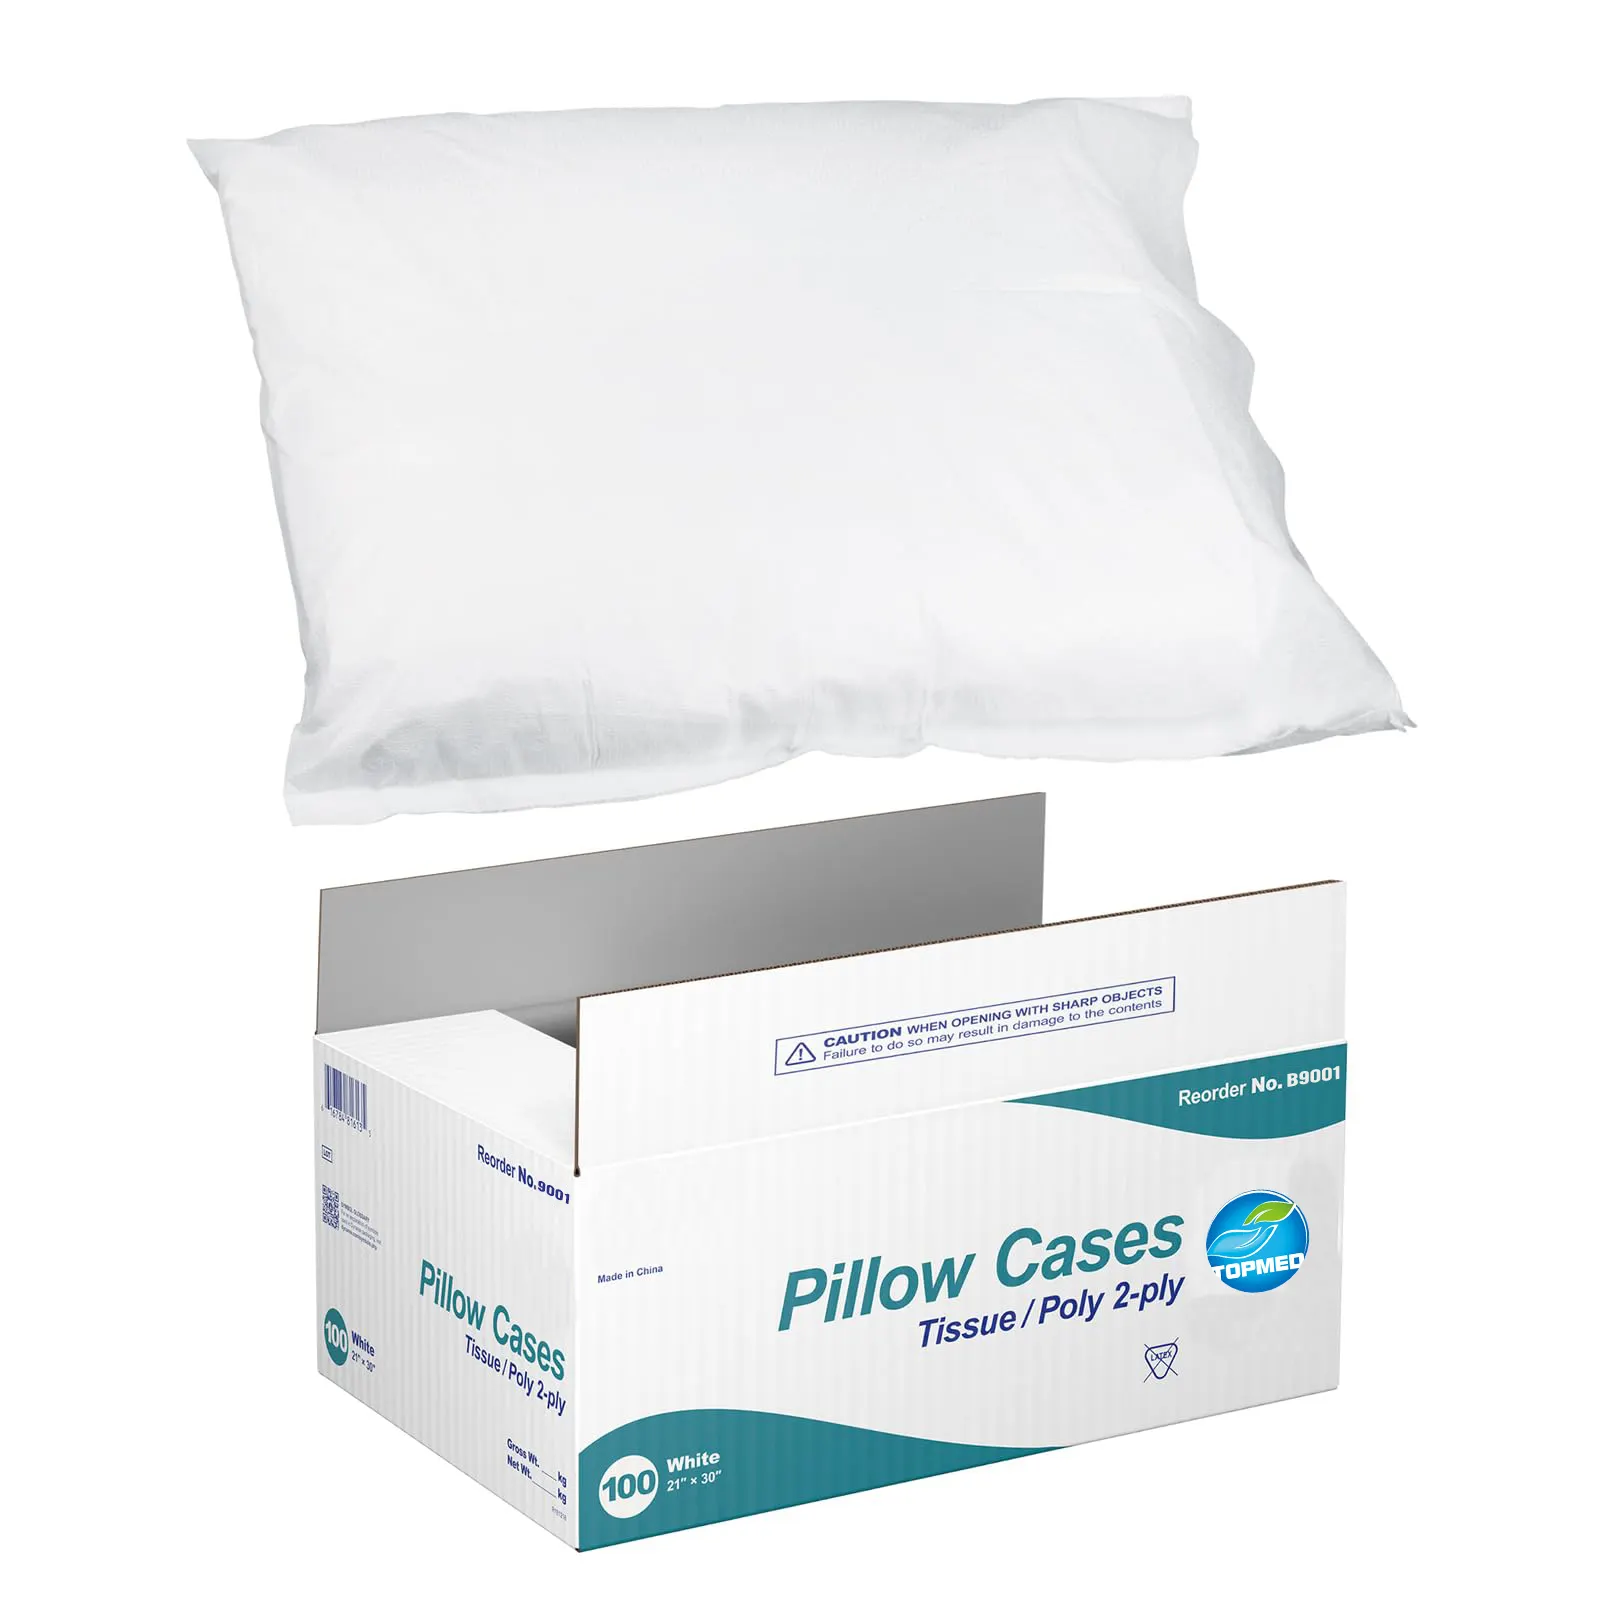 Disposable NON WOVEN pillow cover disposable hotel hospital tourism beauty salon disposable pillow case